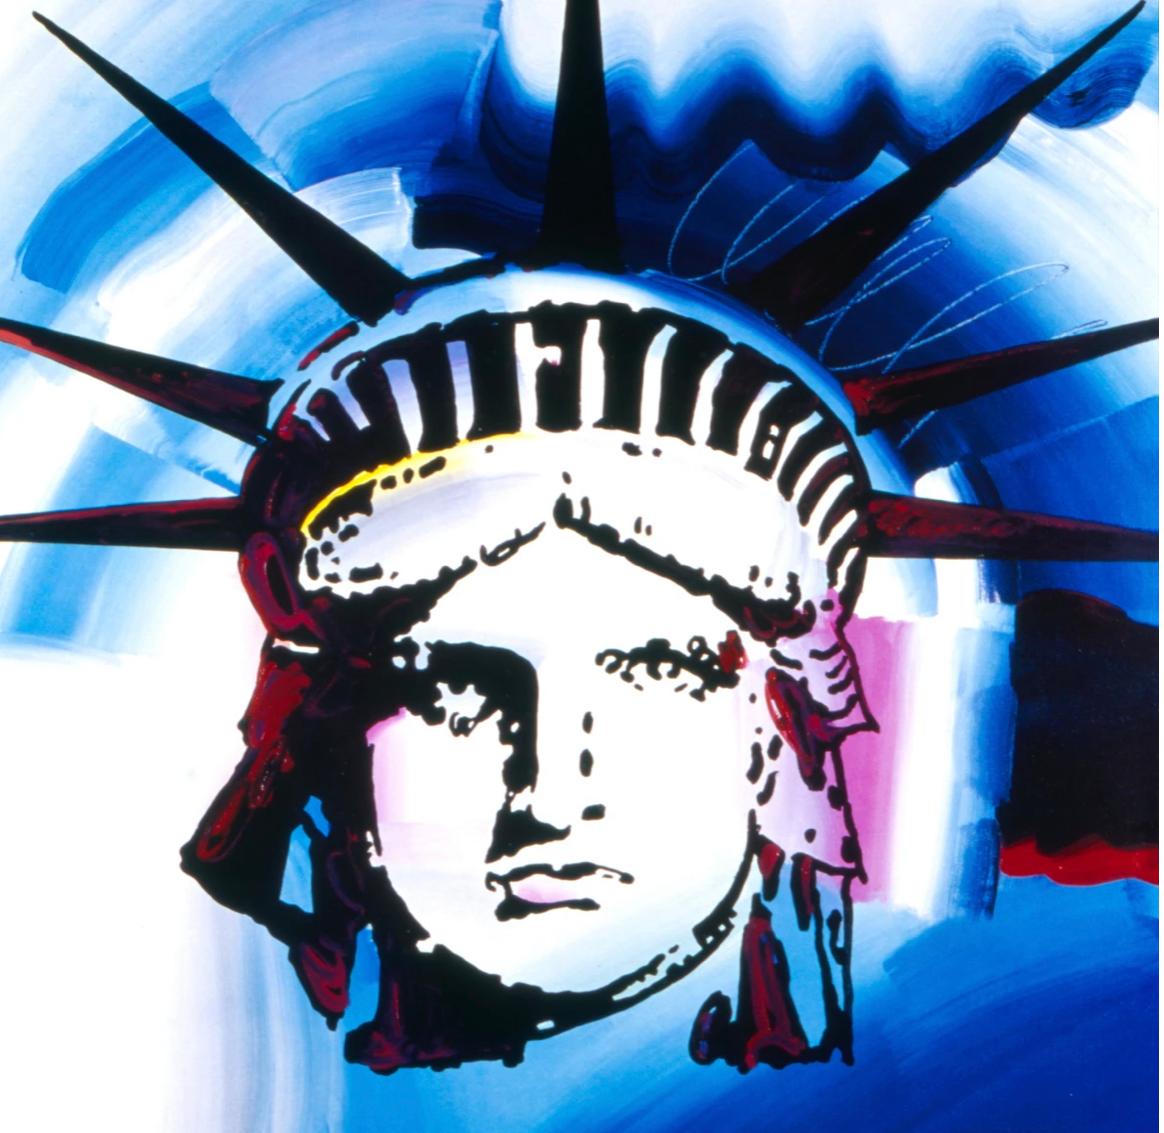 Liberty 2000